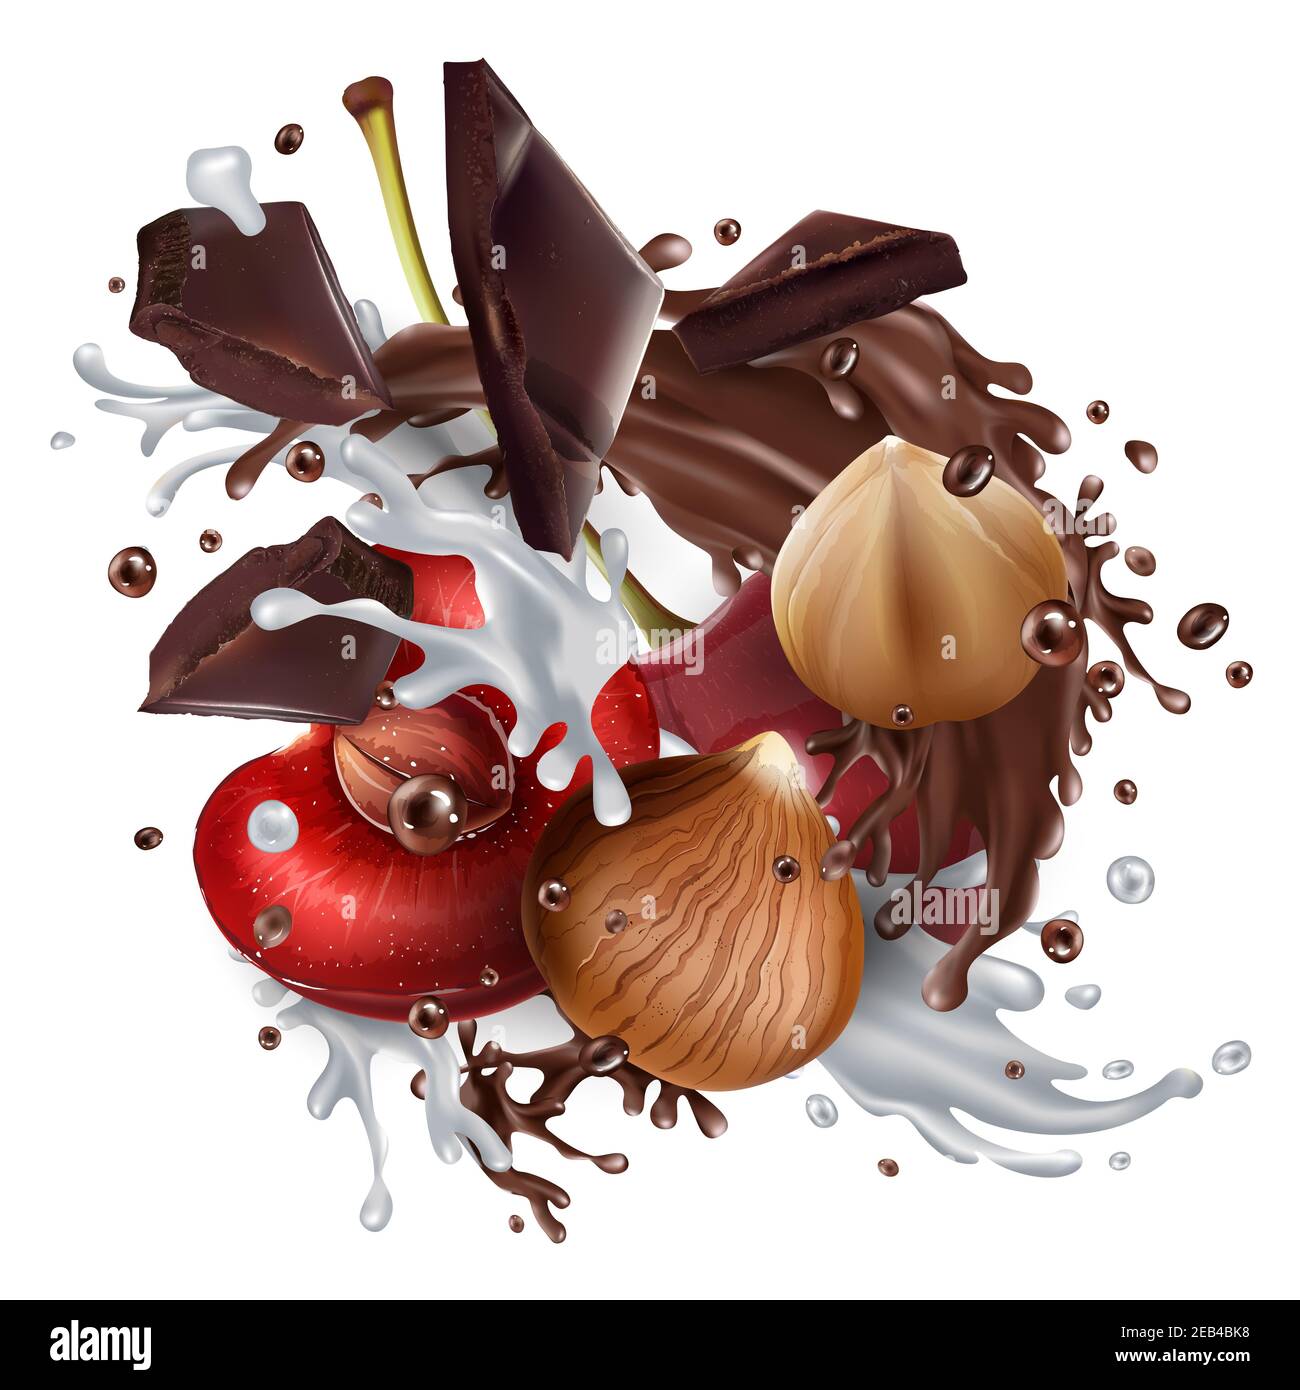 Hazelnuts and cherries with chocolate and milk. Stock Photo